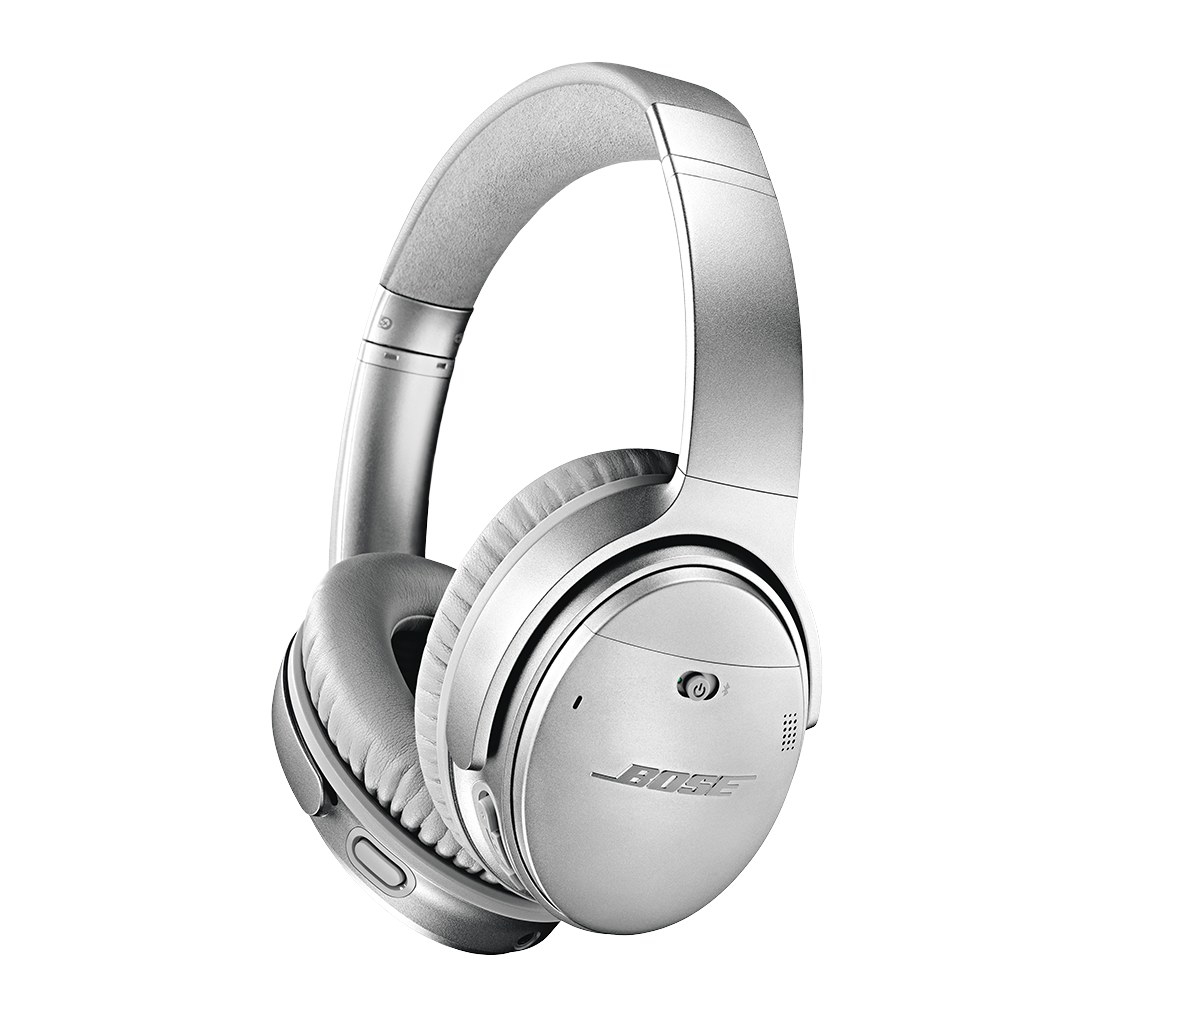 The silver headphones